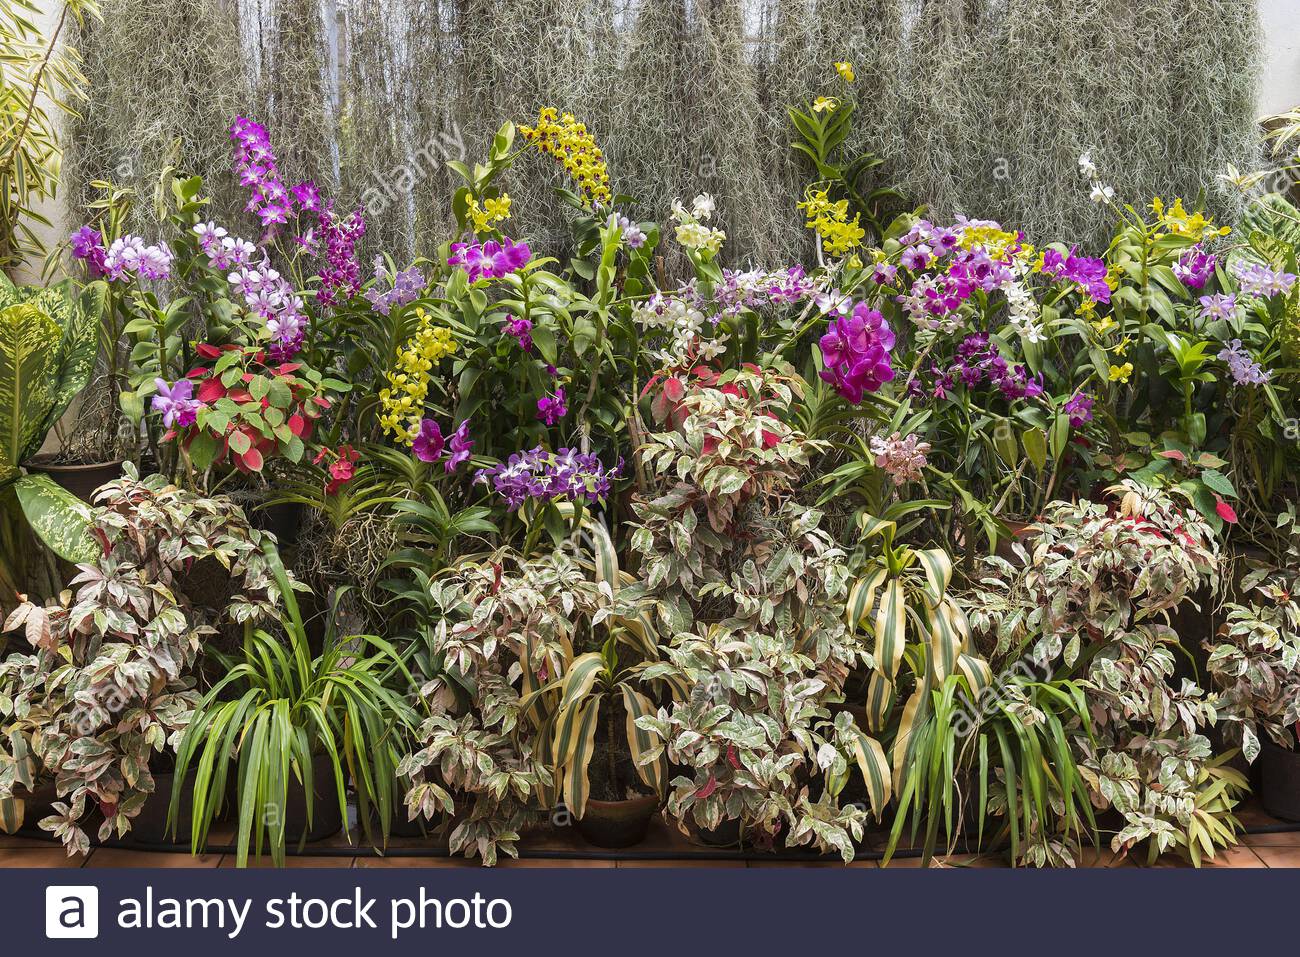 peradeniya botanical gardens kandy sri lanka display of orchids and other tropical plants 2B3RD25